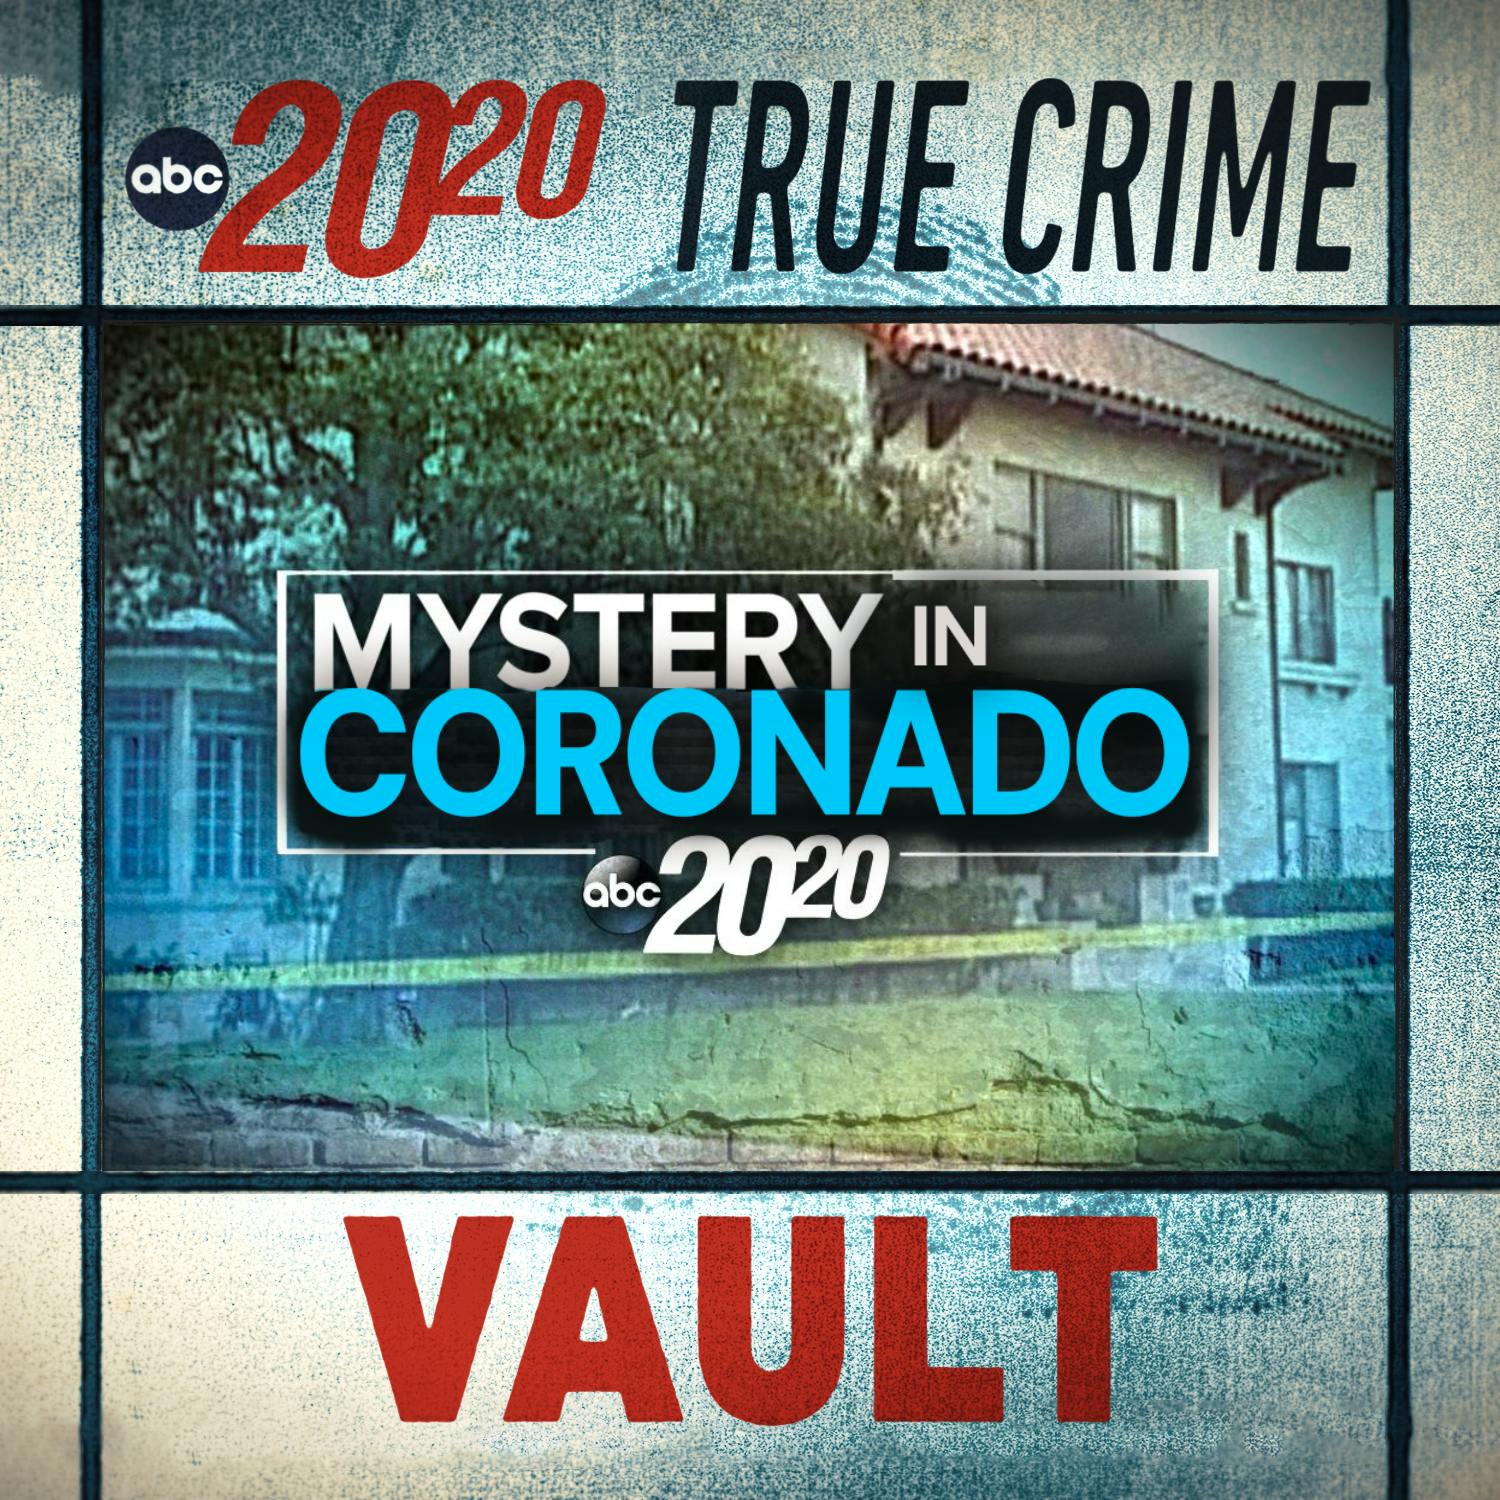 True Crime Vault: Mystery in Coronado by ABC News